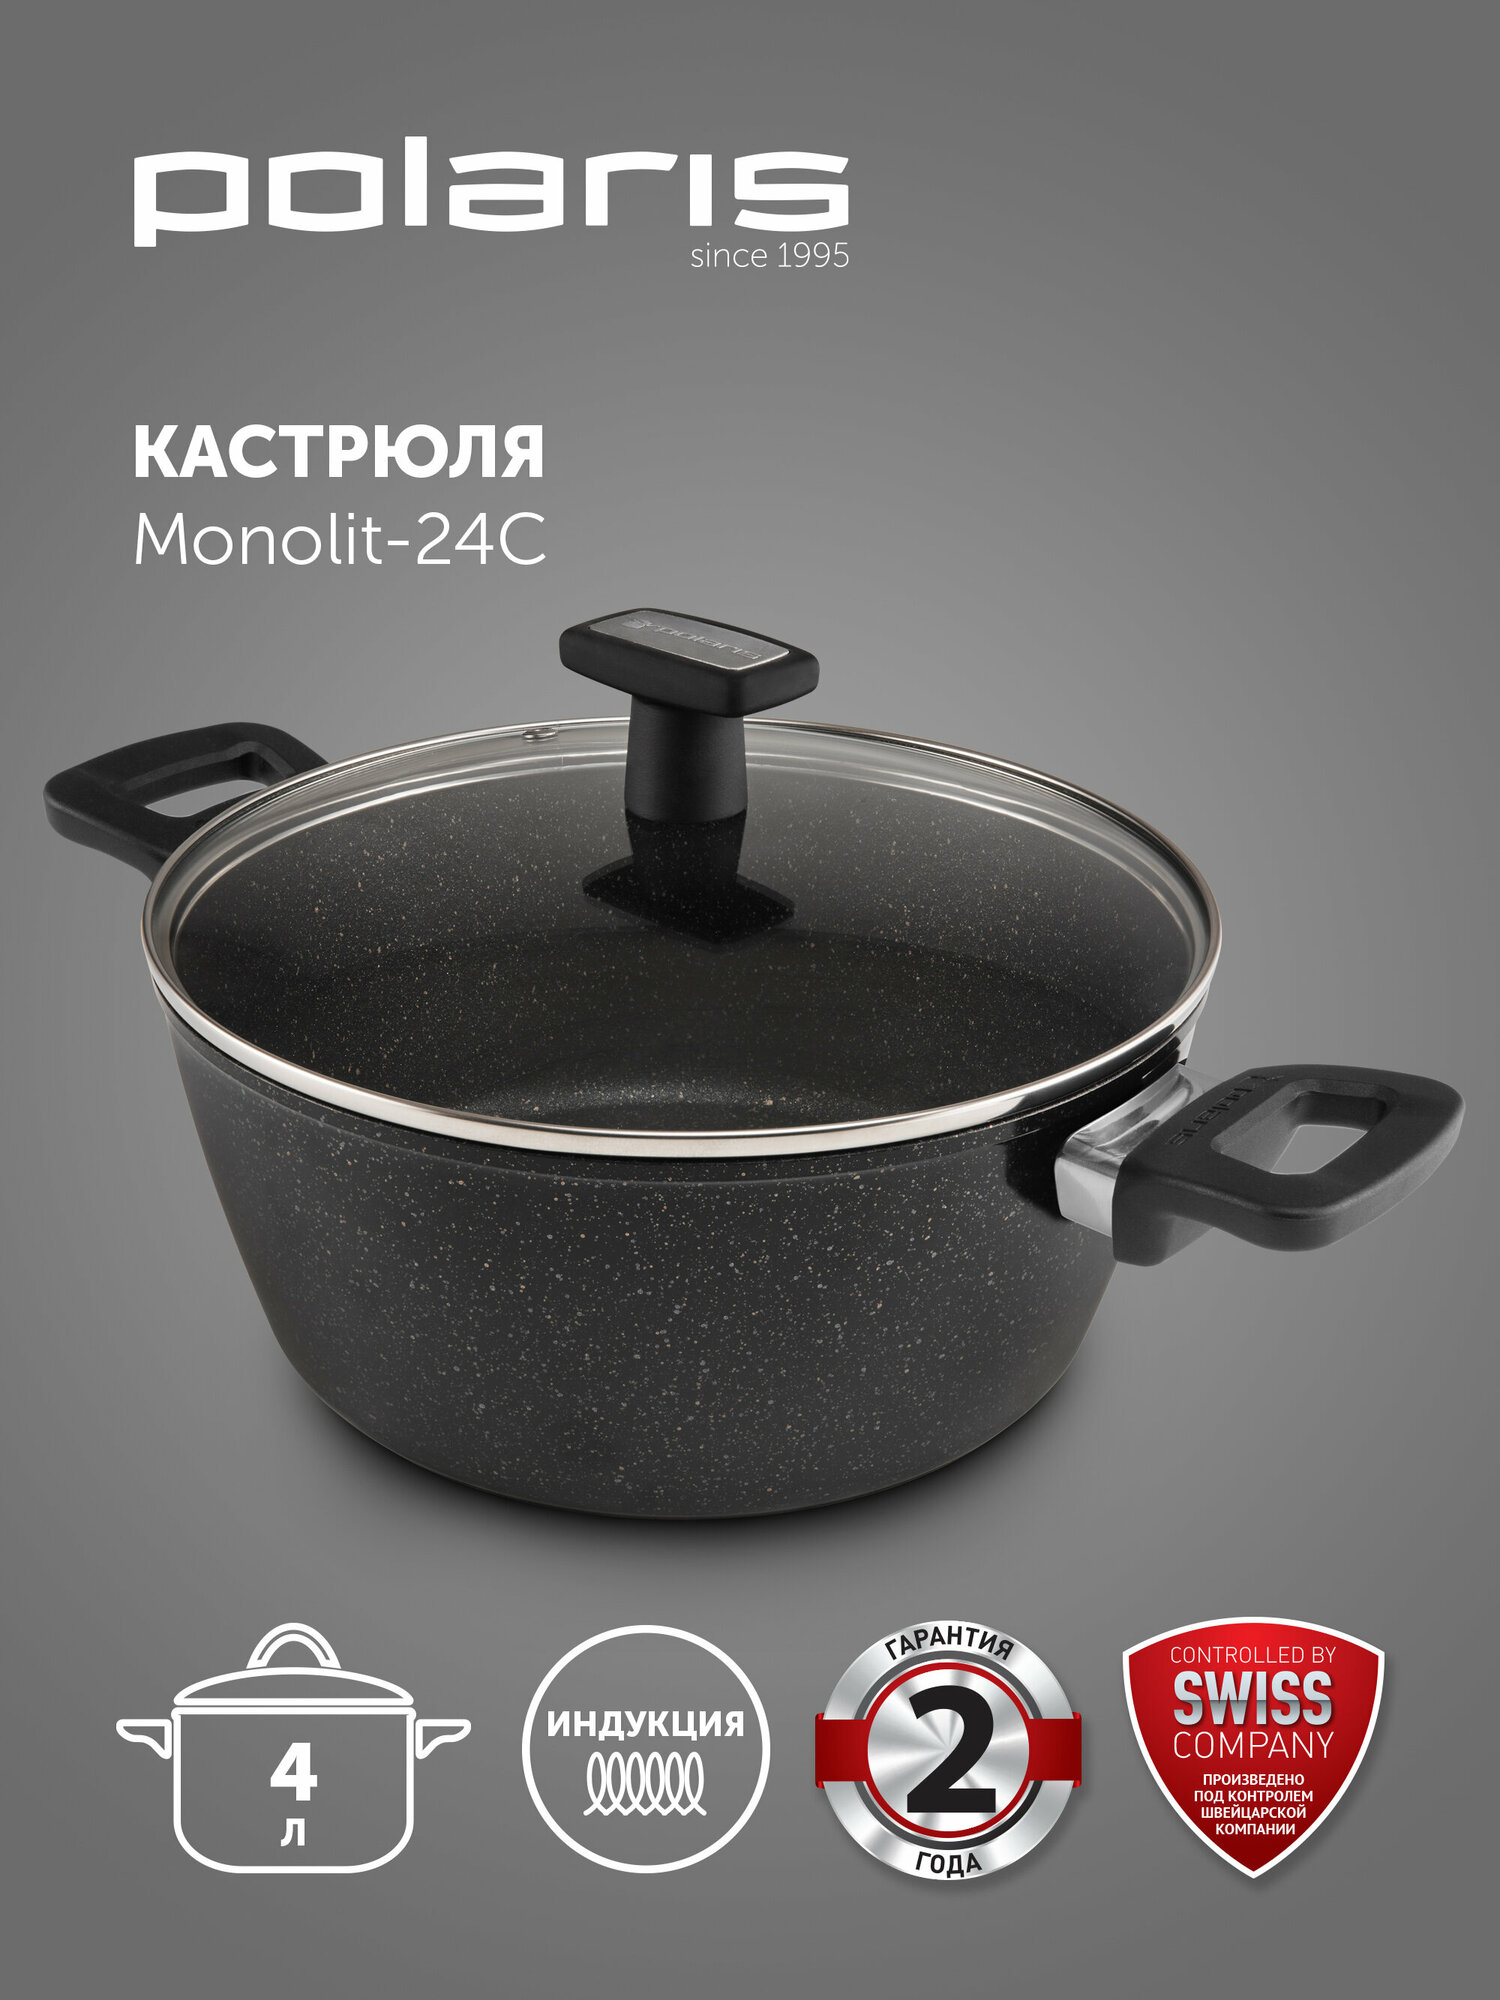 Кастрюля Monolit-24C ков. ал, 4 л (POLARIS)